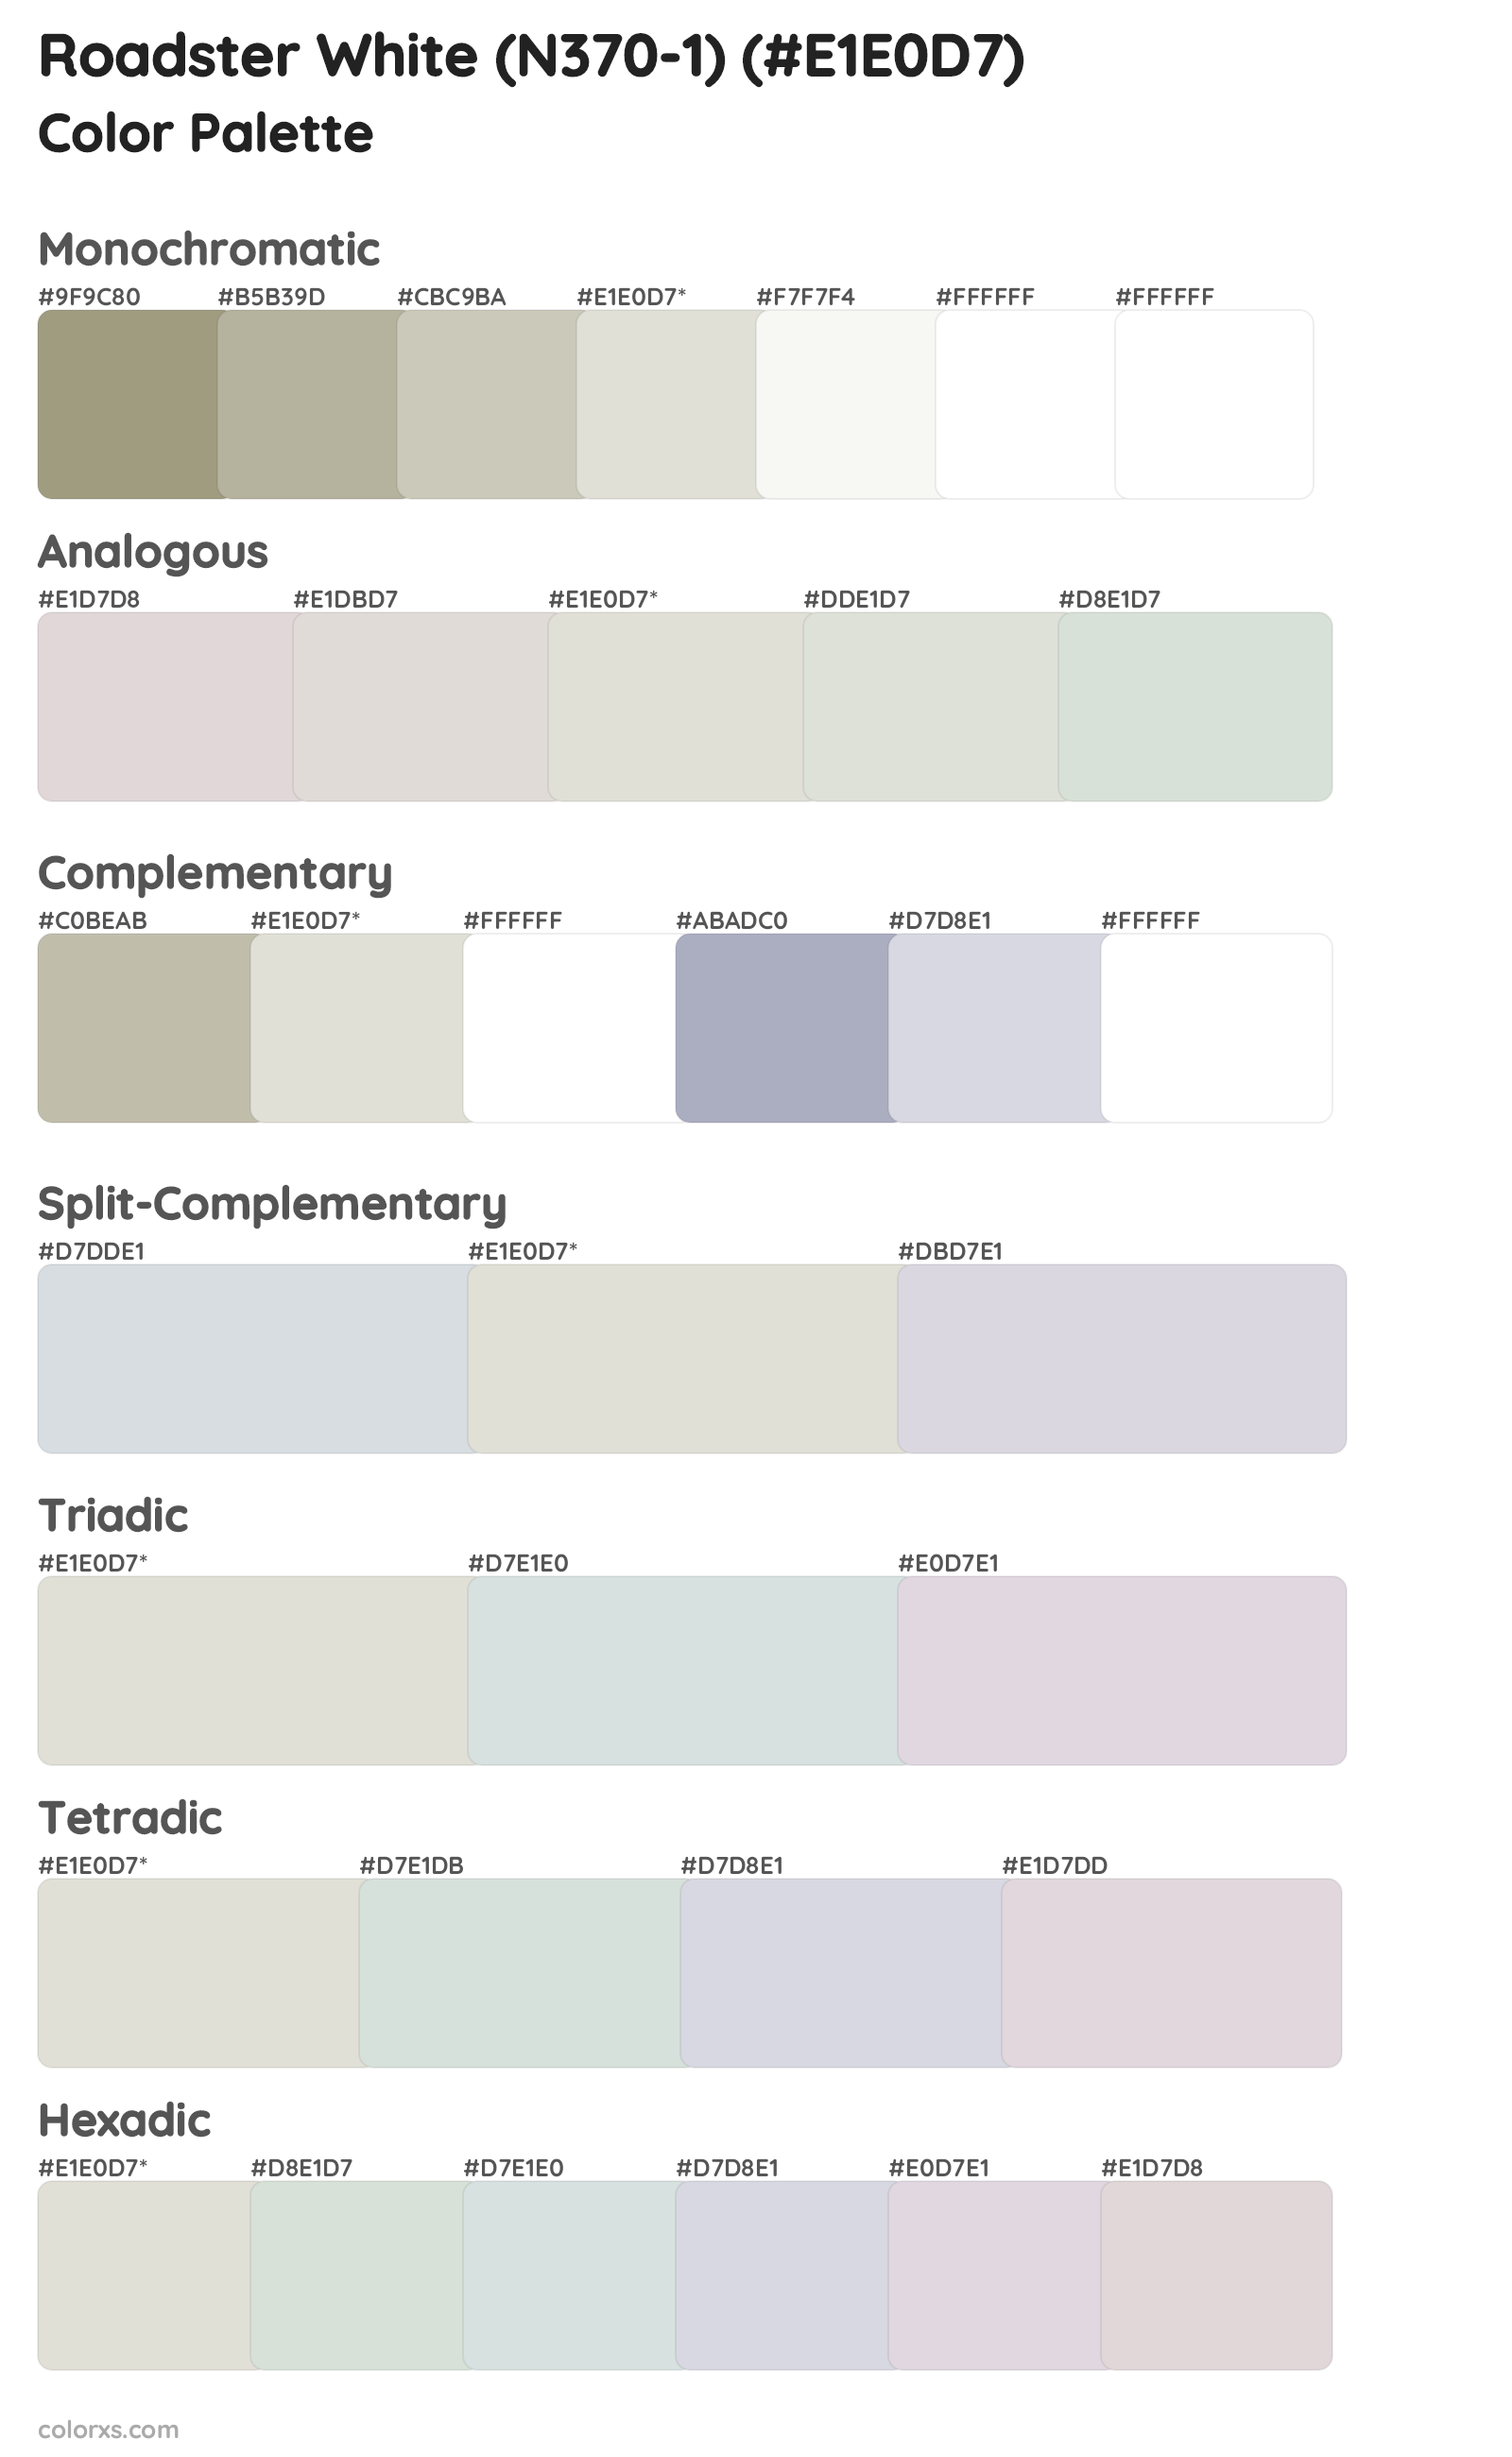 Roadster White (N370-1) Color Scheme Palettes